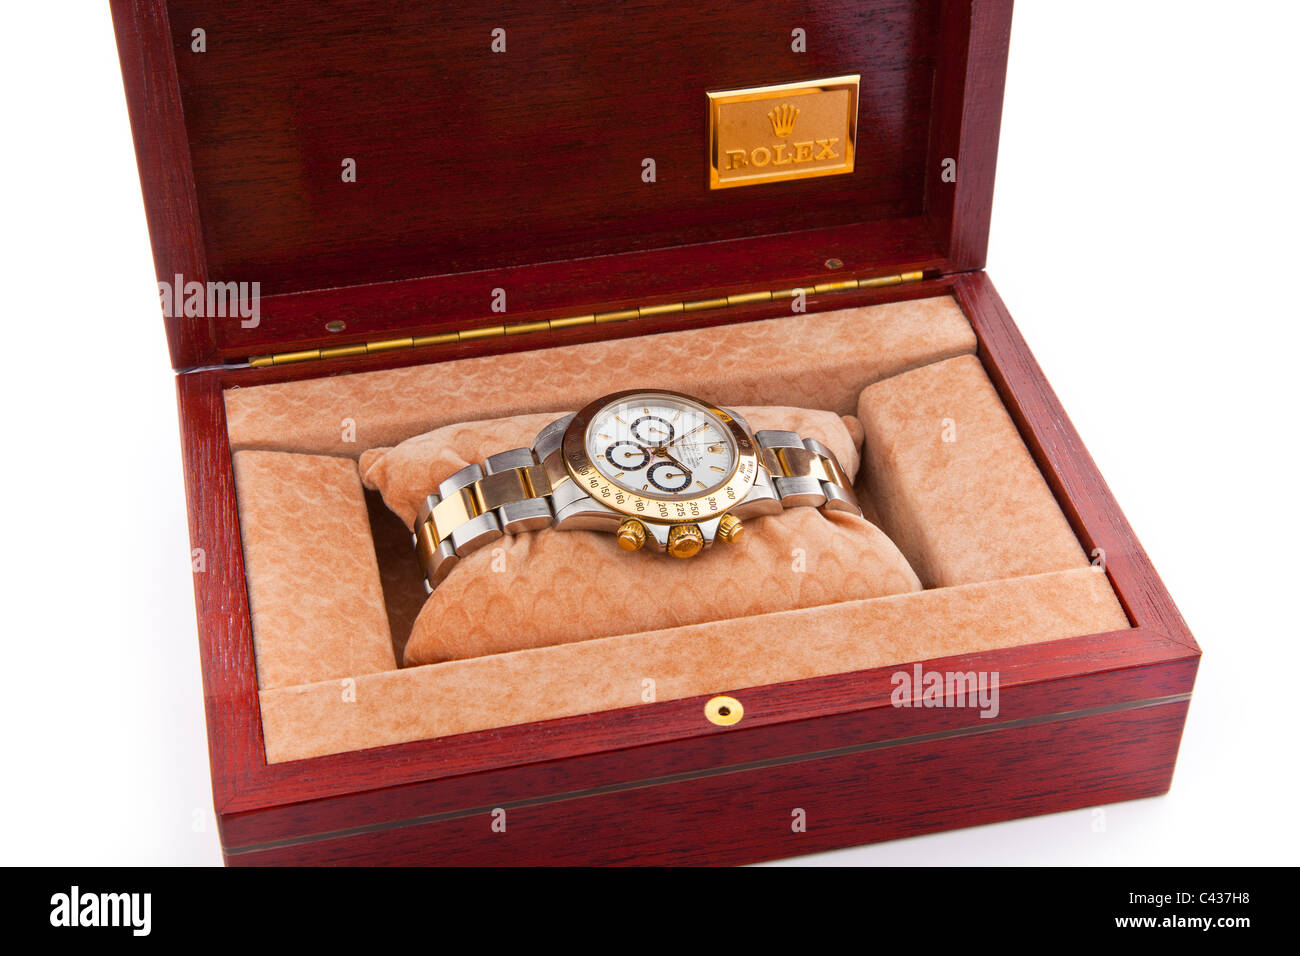 Rolex Daytona Cosmograph Oyster Perpetual Chronometer 18k Gold und Stahl Swiss Chronograph Armbanduhr mit weißem Zifferblatt JMH4904 Stockfoto